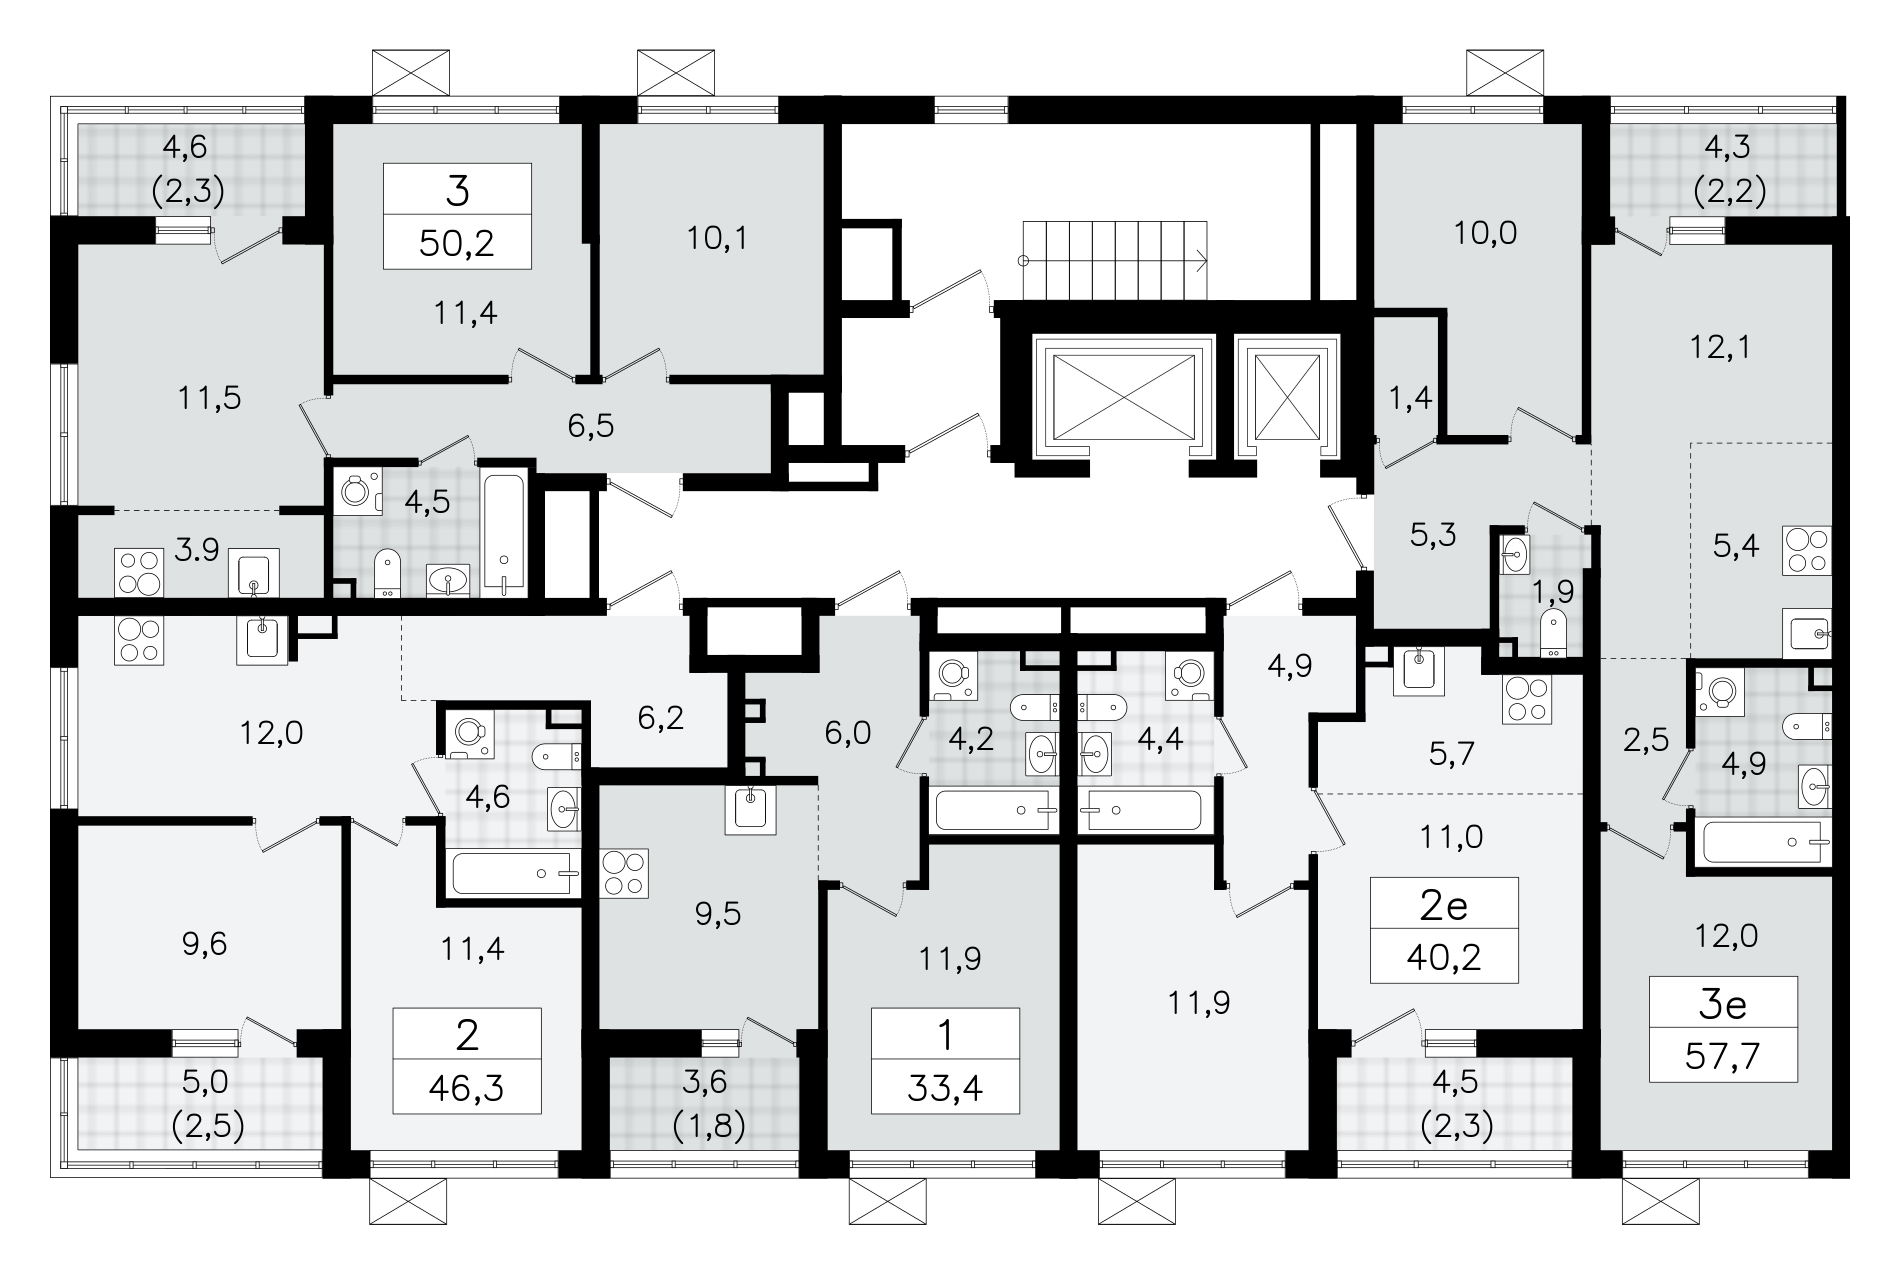 3-комнатная (Евро) квартира, 57.7 м² - планировка этажа